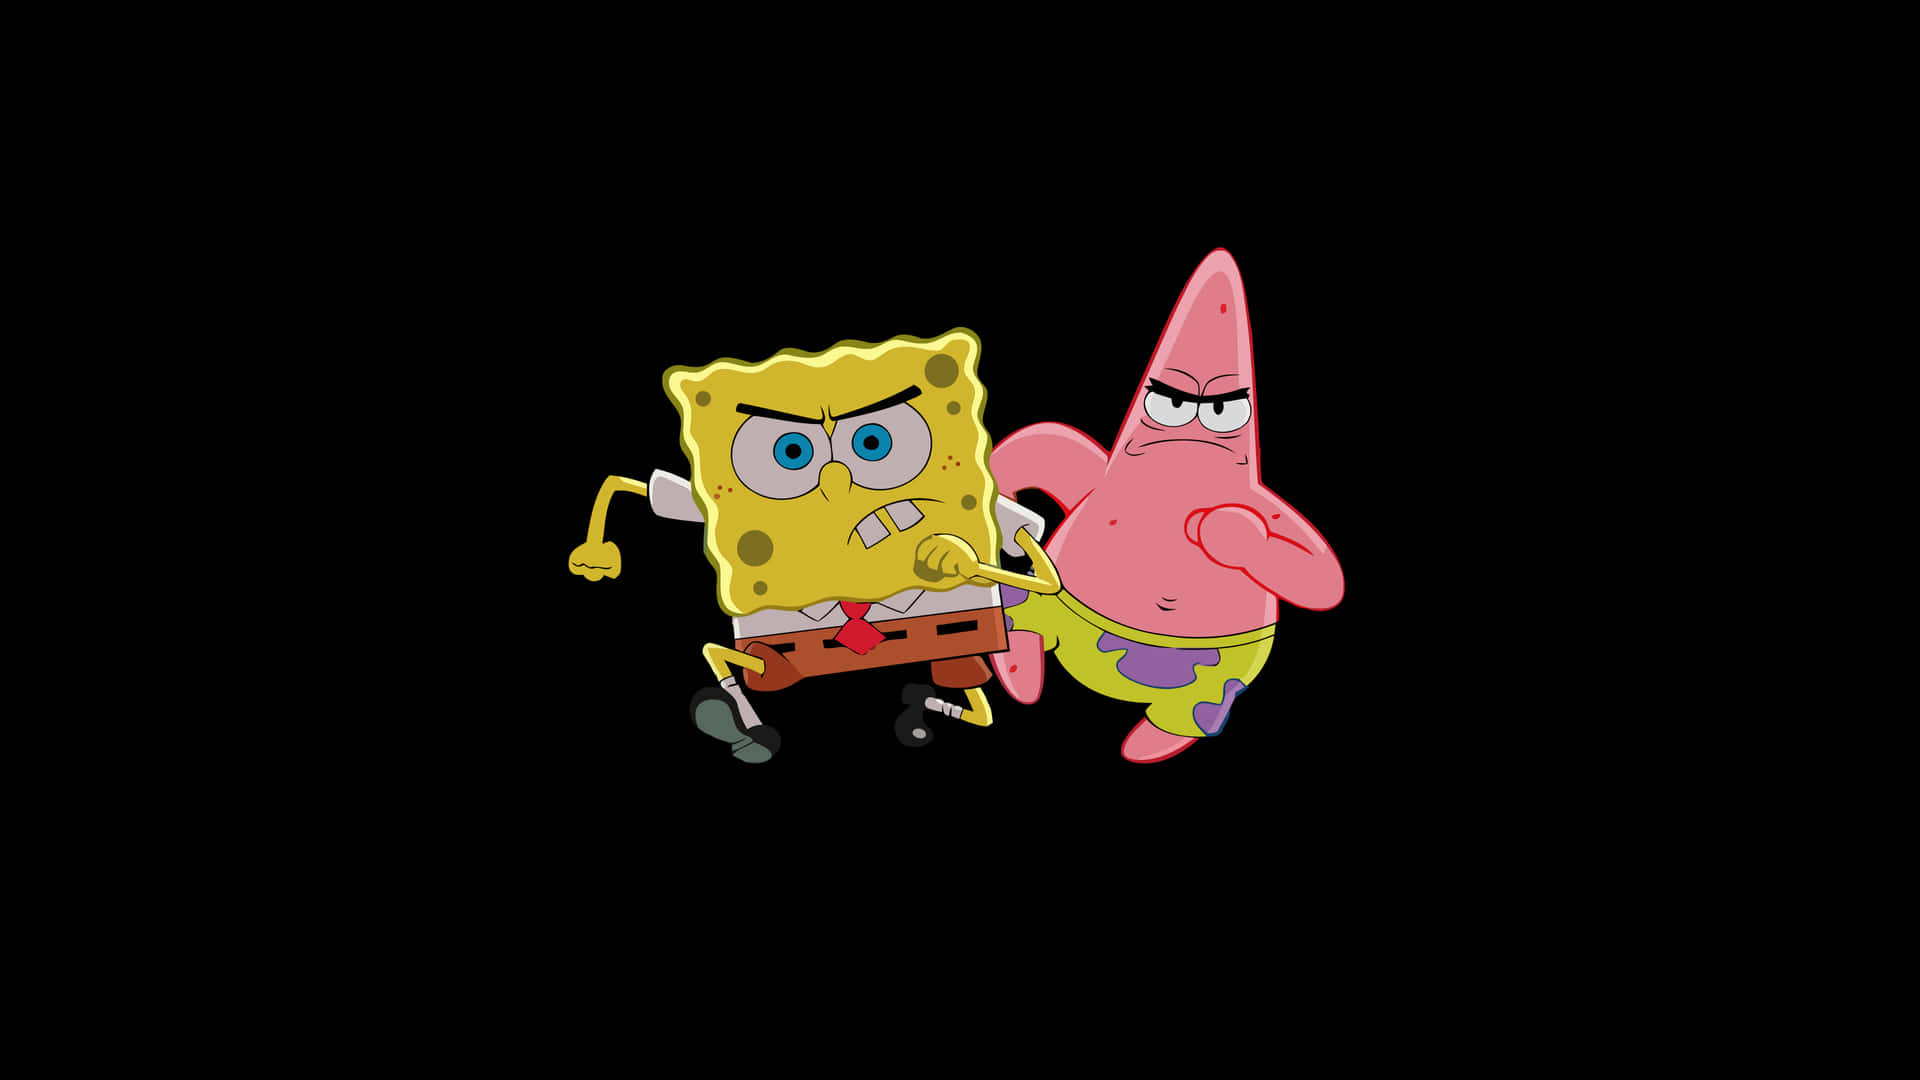 Patrick Star, Cartoon Star of "Spongebob Squarepants"